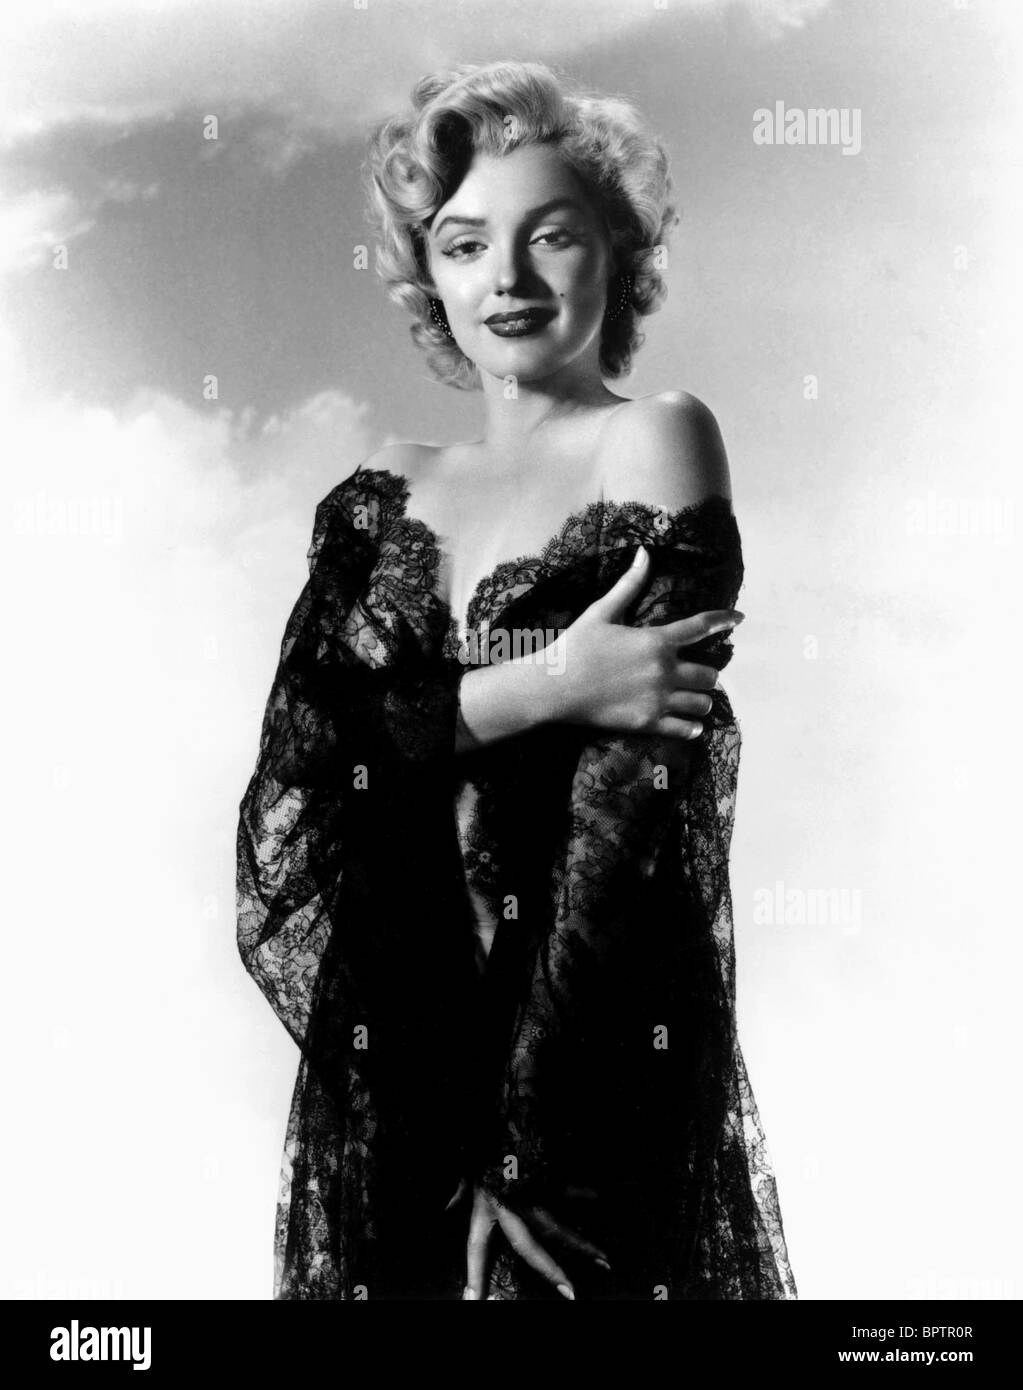 MARILYN MONROE ACTRESS (1959) Stock Photo